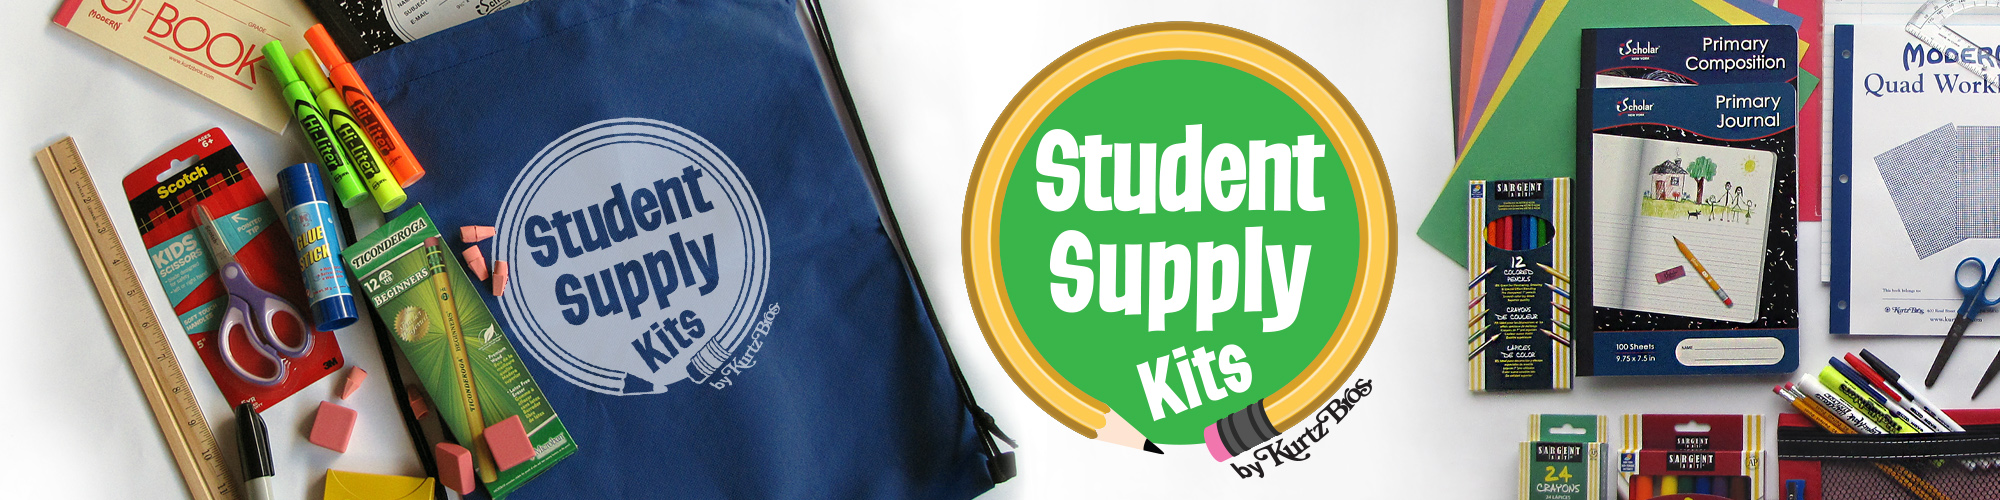 Student Supply Kits